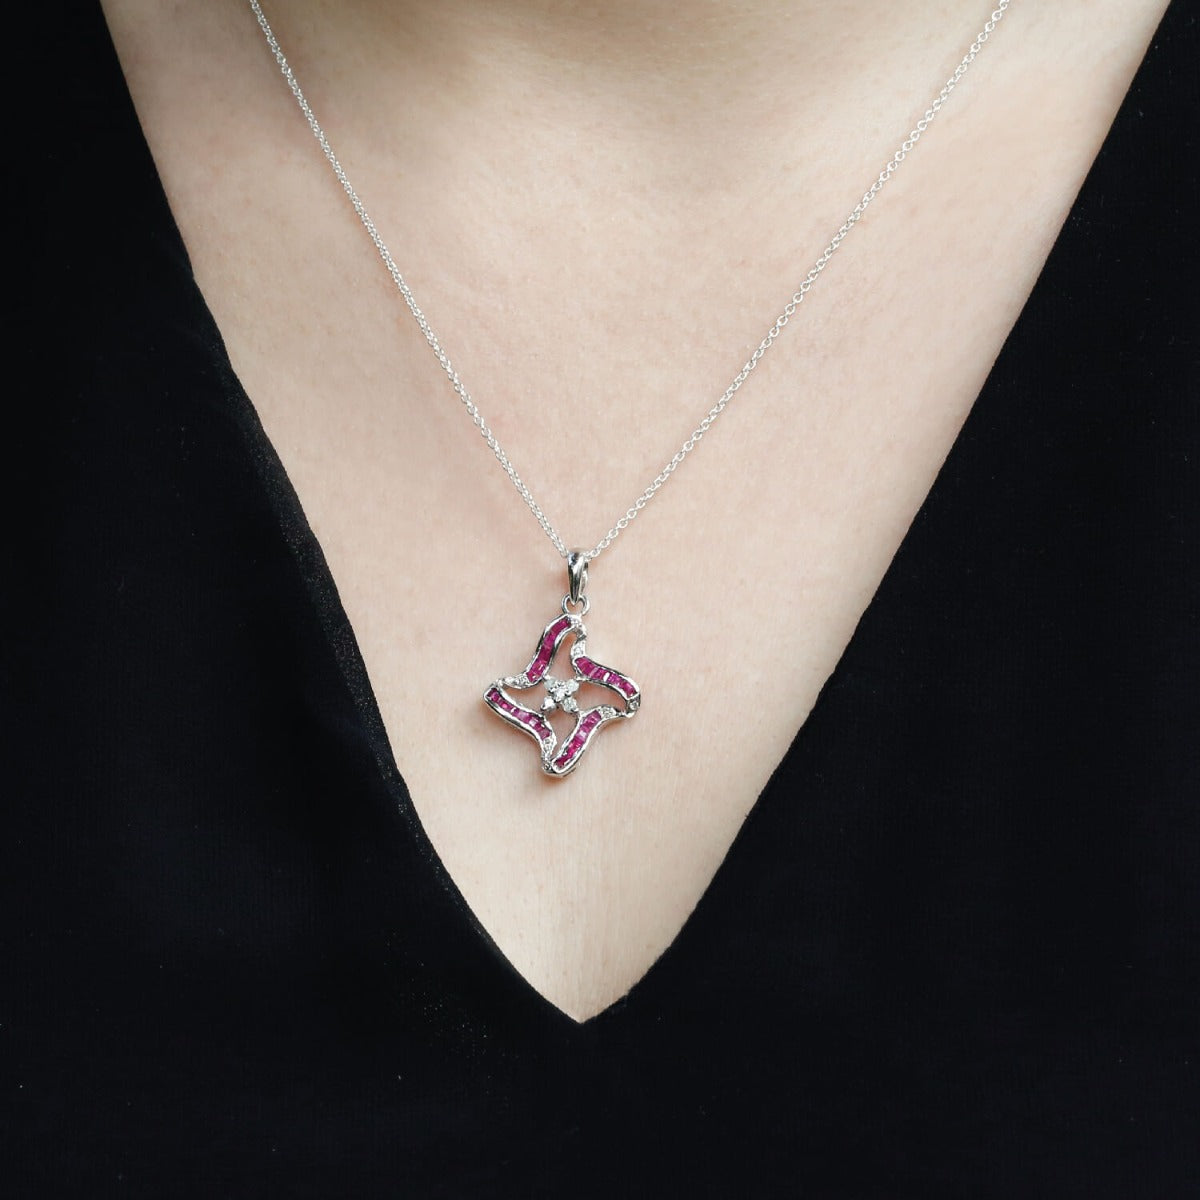 Exquisite diamond and ruby pendant